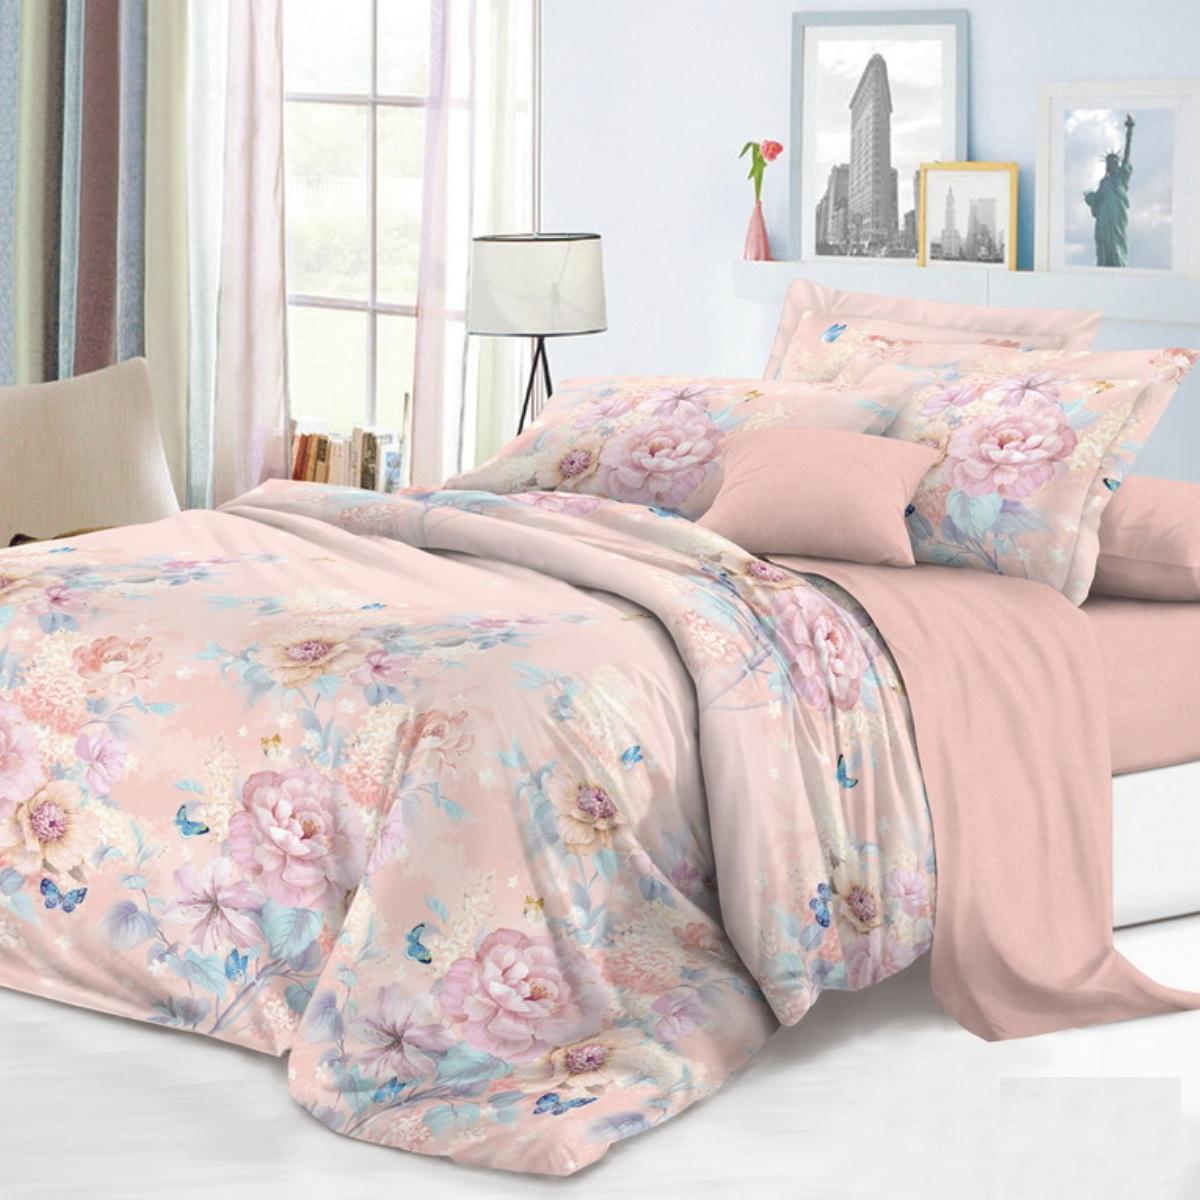 фото Комплект постельного белья Letto, SM150-6, розовый, евро, наволочки 50х70 Letto home textile